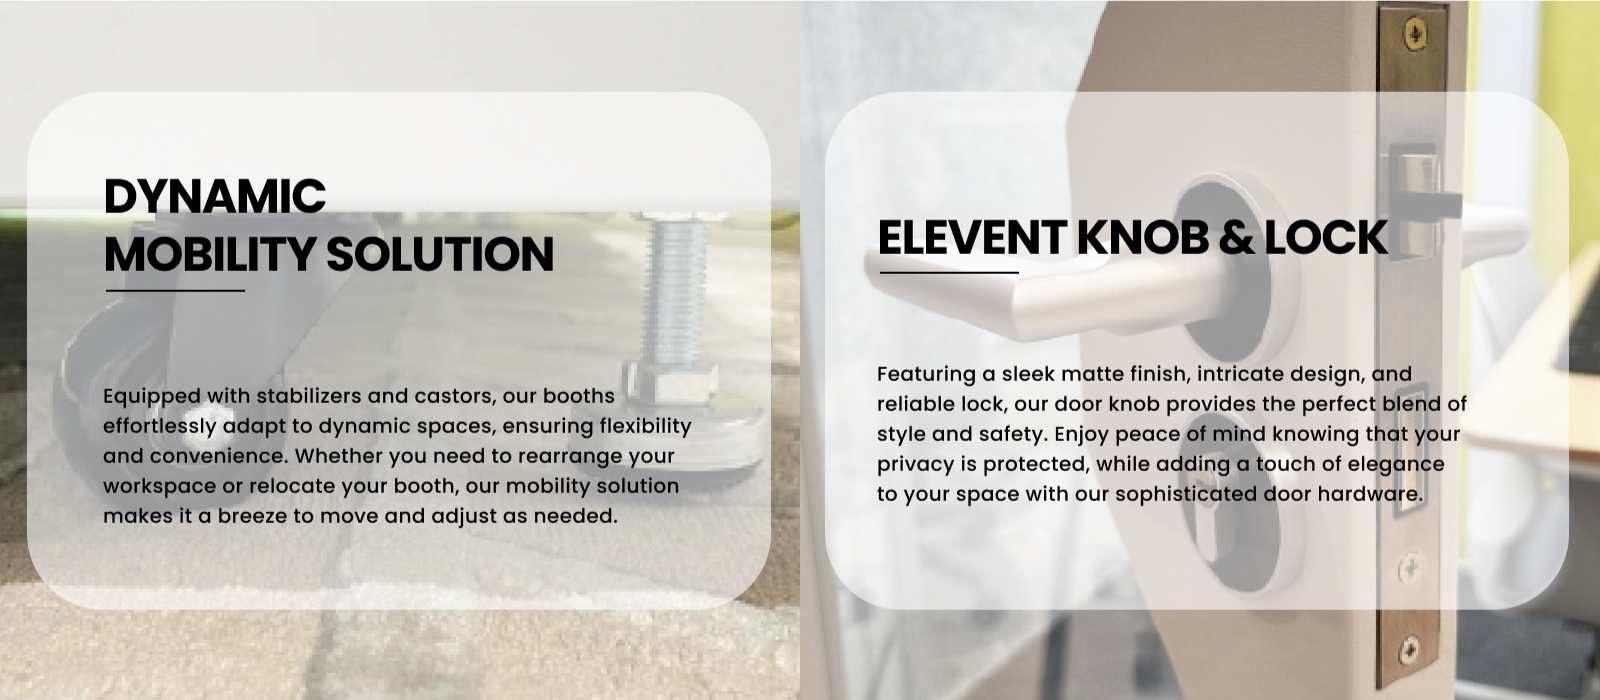 WorkaPod™ Dynamic mobility solution / Elevent knob & lock